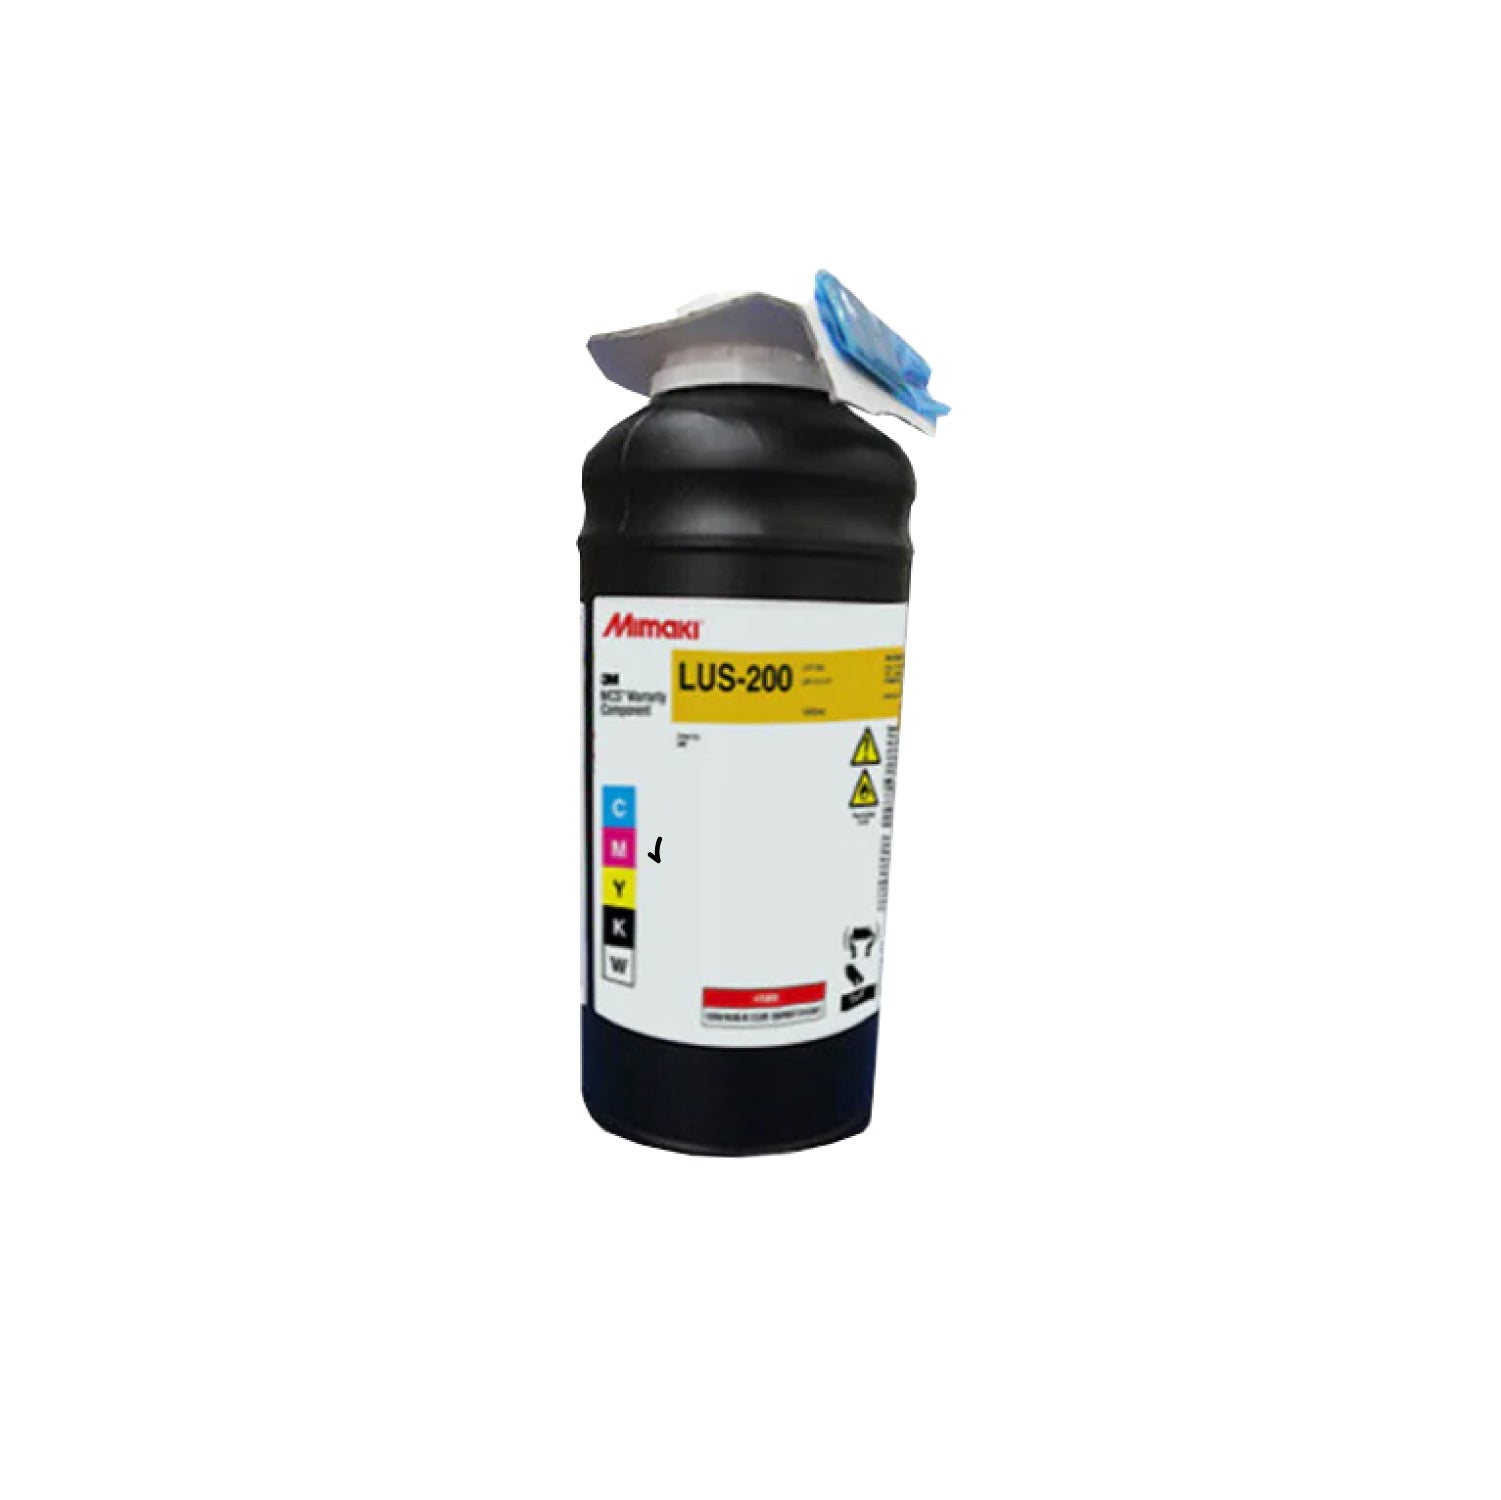 A 1000ml bottle of magenta LUS-200 Mimaki UV ink